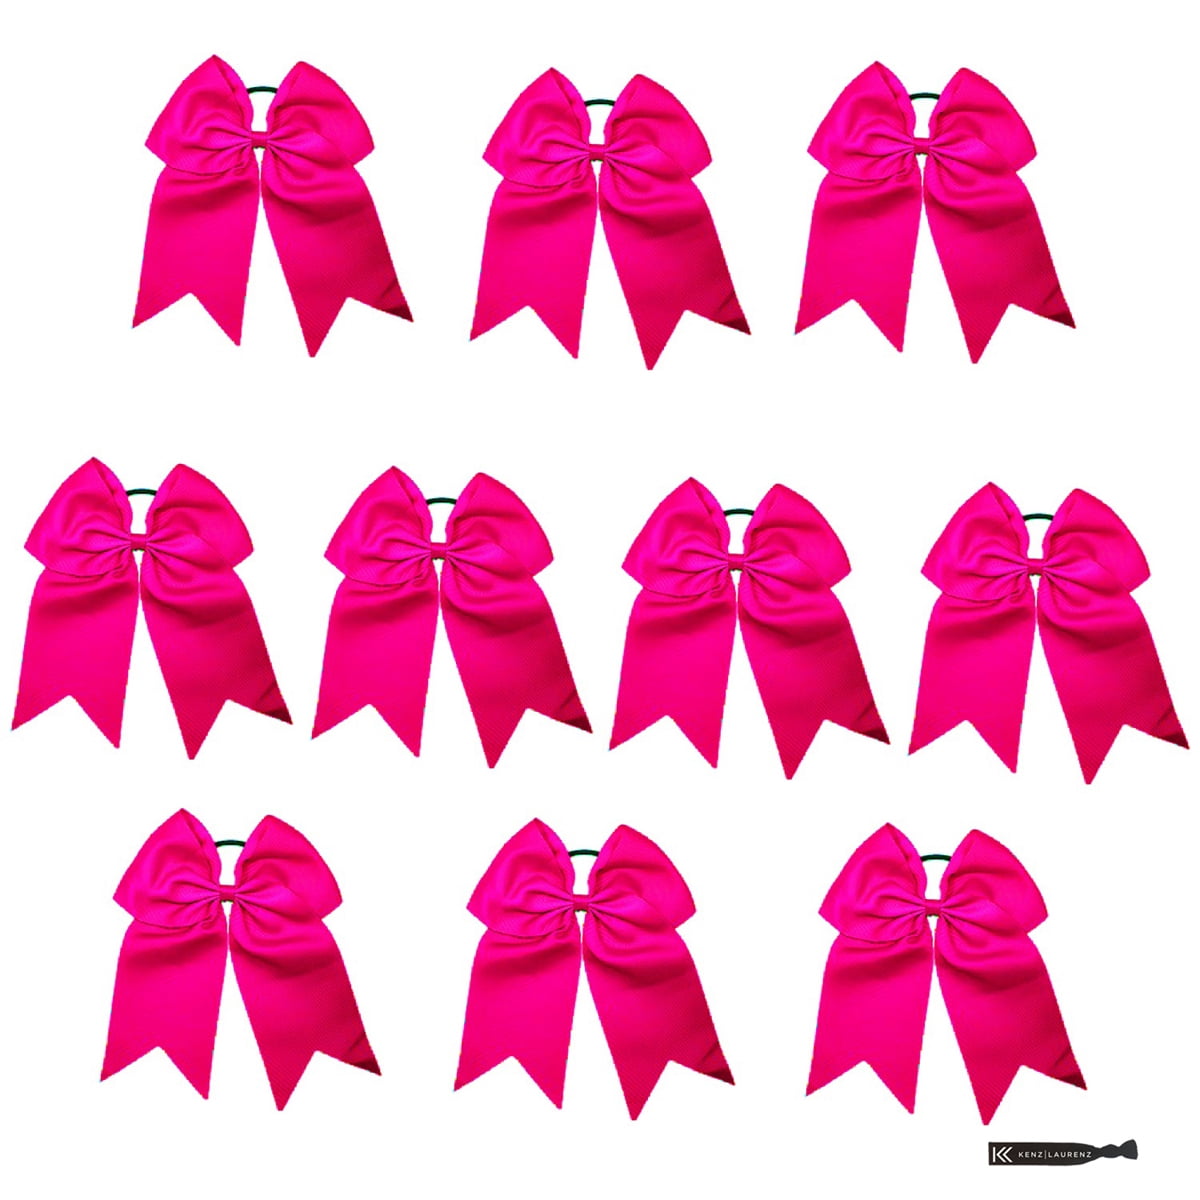 50 USA JUMBO 7" Cheer Bow Ponytail Holder Big Girls Large Hair Bows 